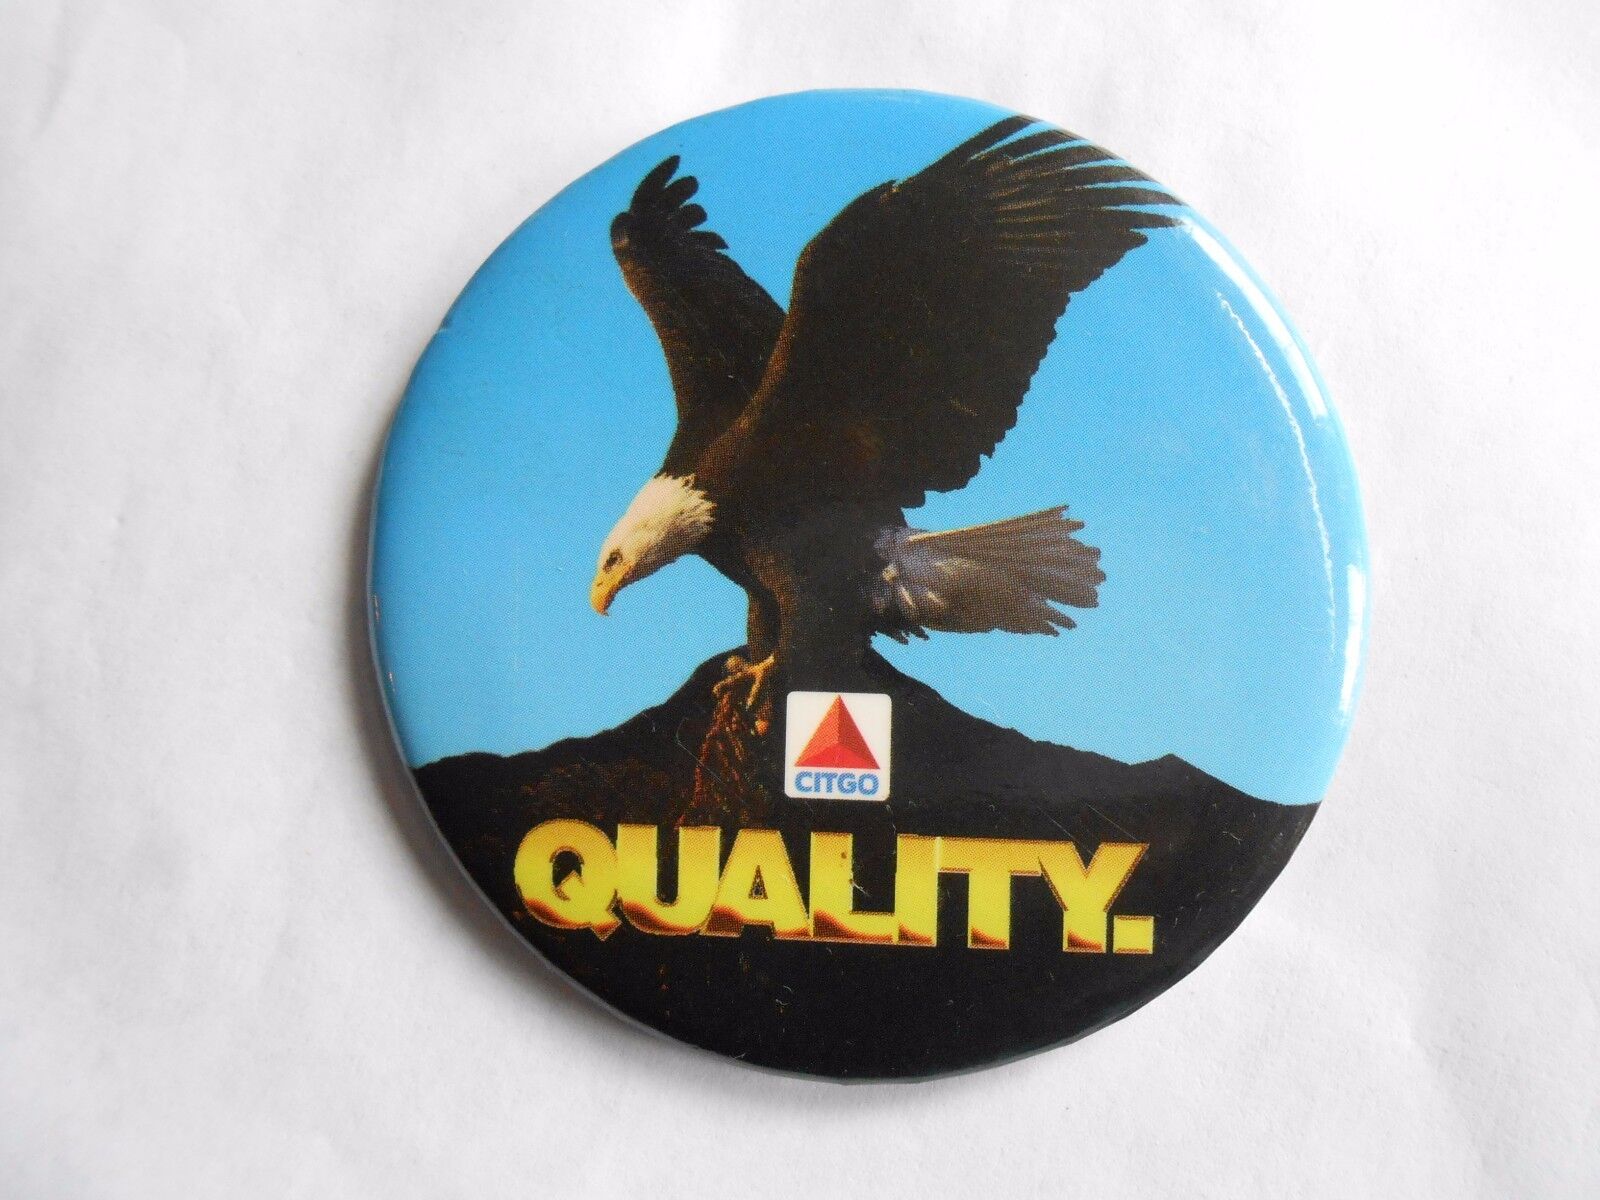 Vintage Citgo Quality Gasoline Bald Eagle Advertising Pinback Button Без бренда